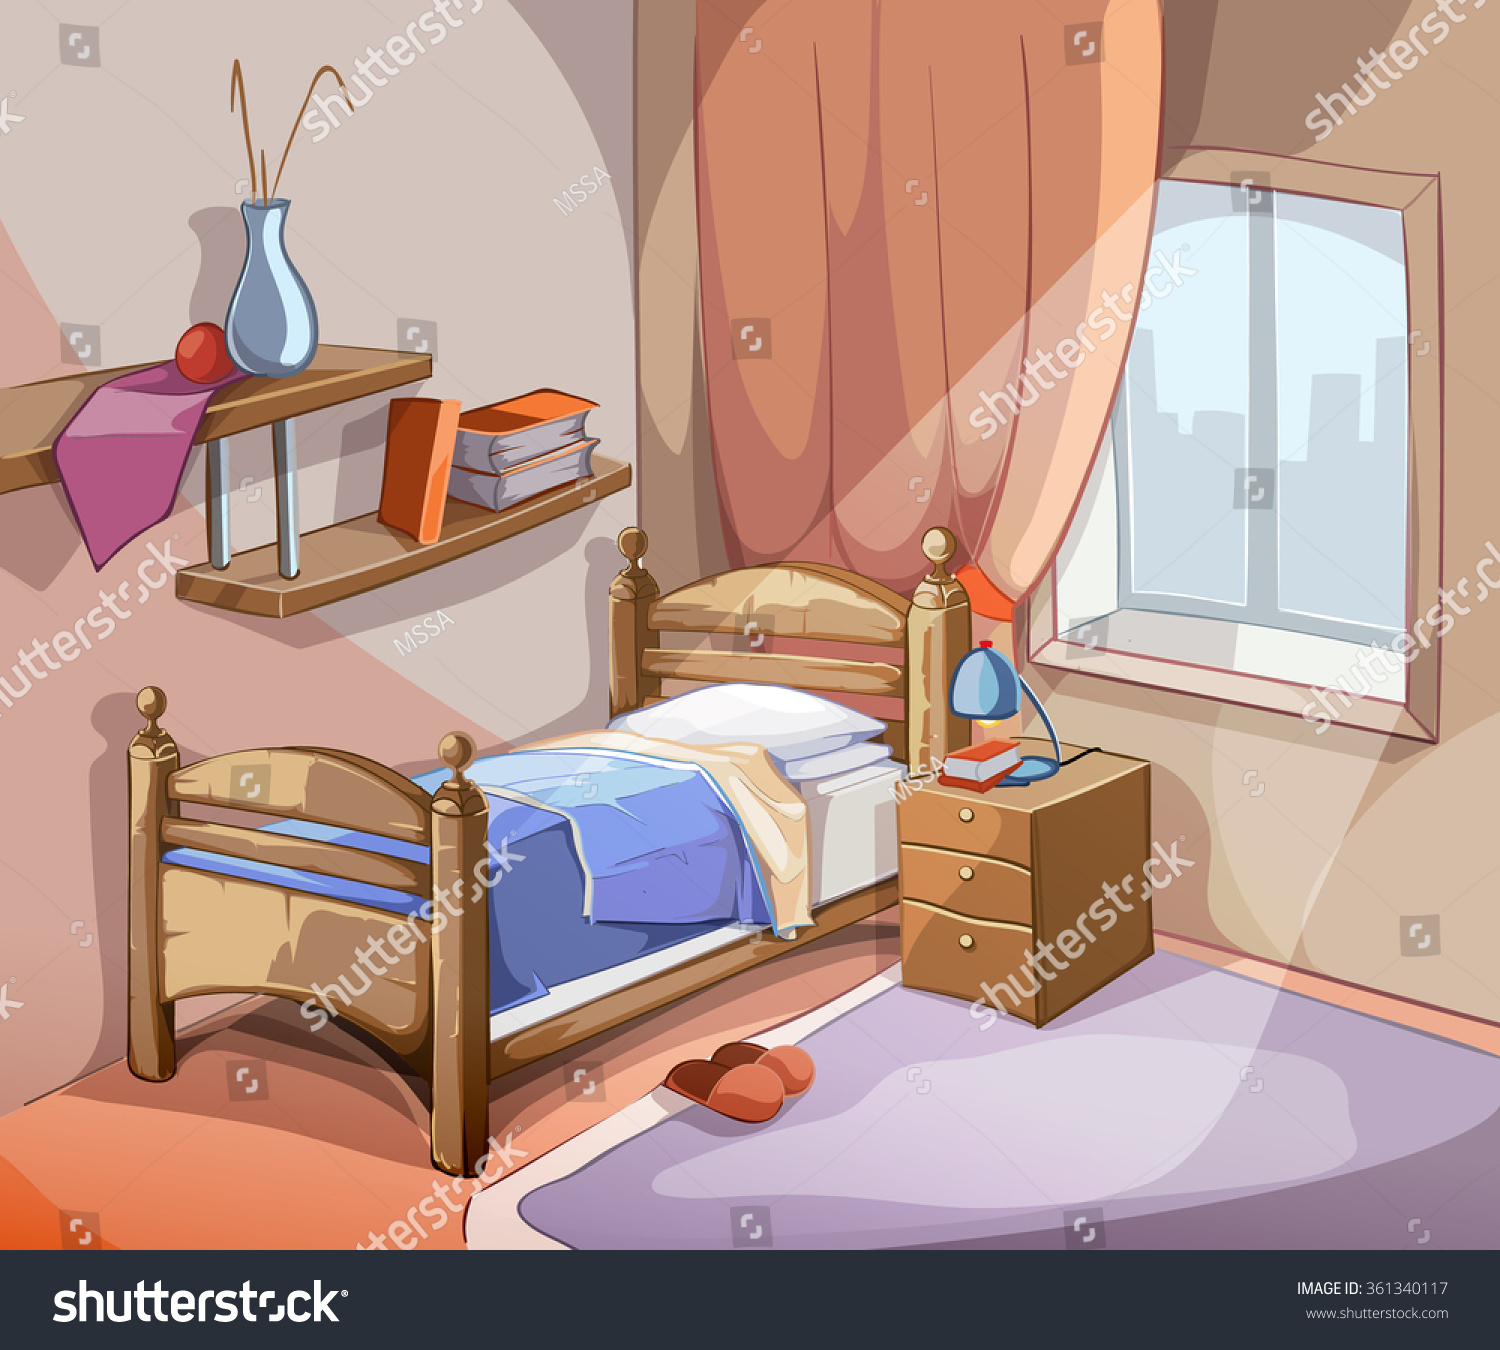 Bedroom Interior Cartoon Style Furniture Design Stock Vector 361340117